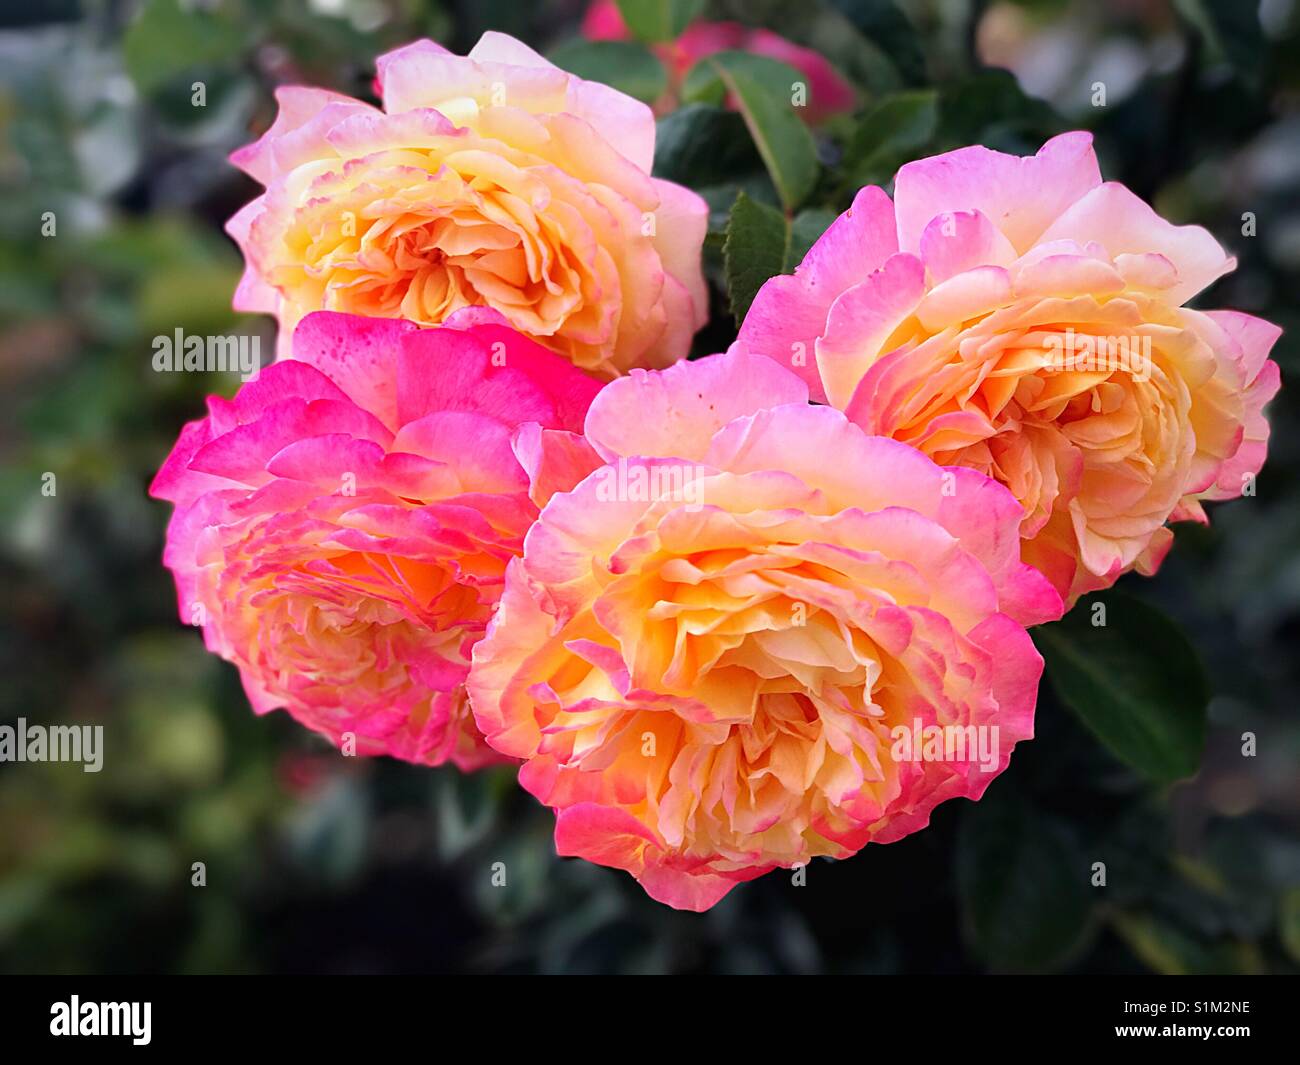 Romantic rose Stock Photo